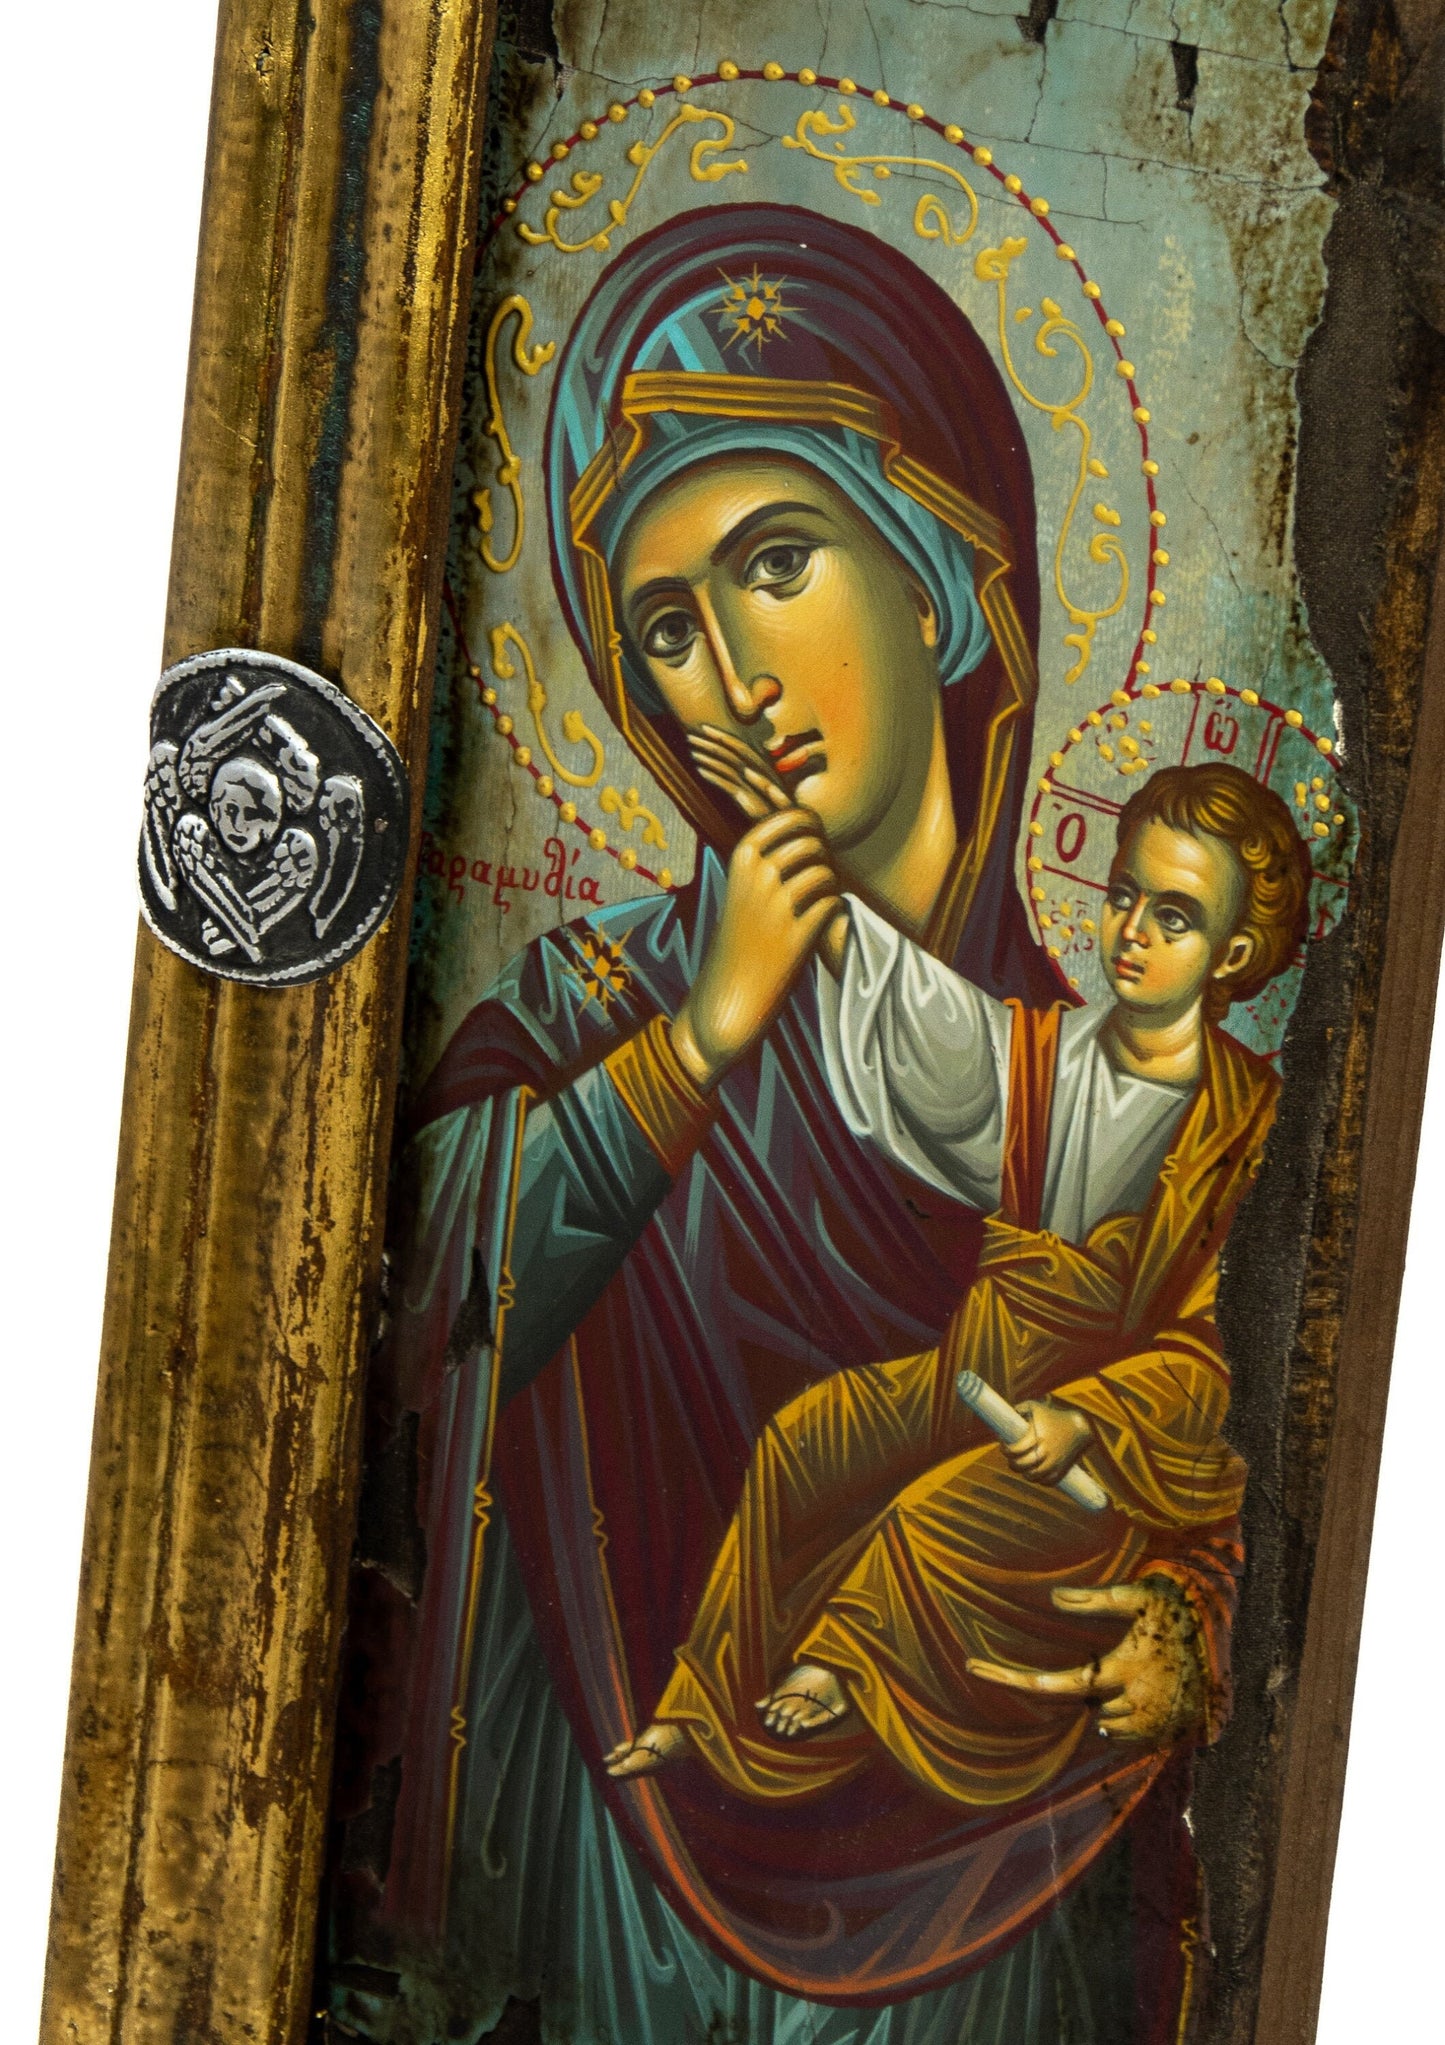 Virgin Mary icon Panagia, Handmade Greek Orthodox icon Theotokos, Mother of God Byzantine art wall hanging canvas icon wood plaque 34x16cm TheHolyArt